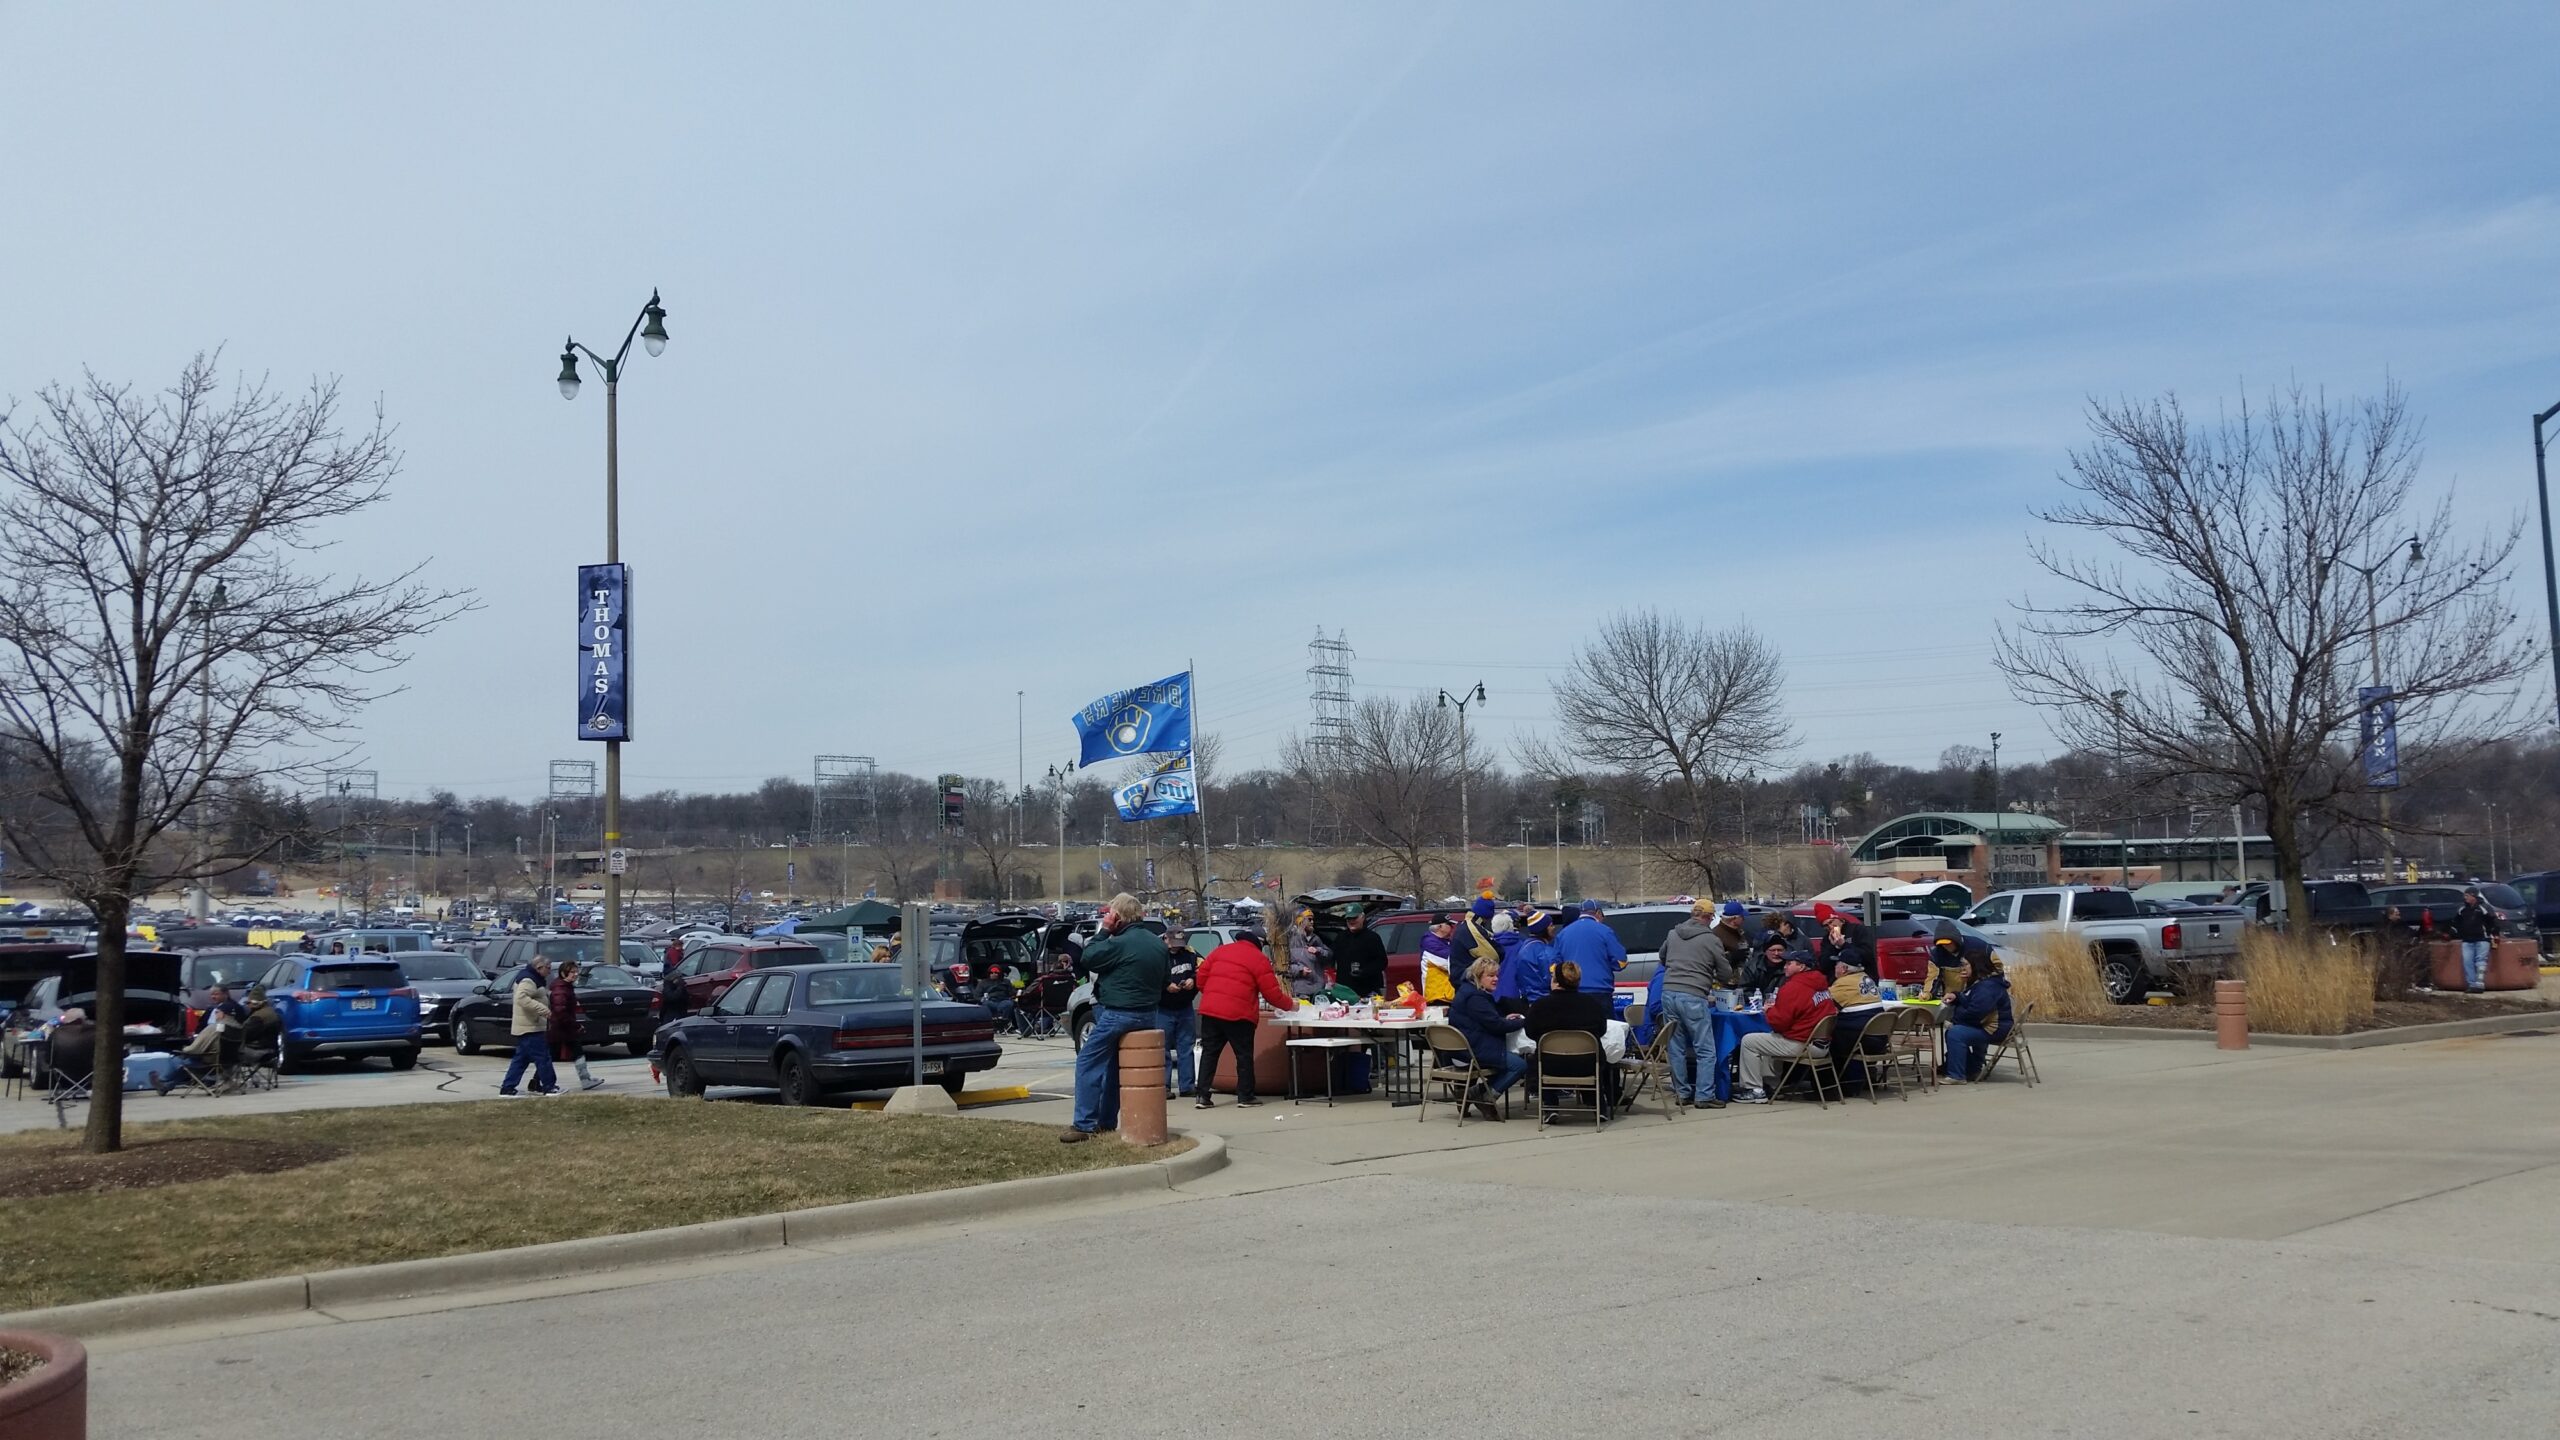 Fans tailgate in the parking lot outside Miller Park